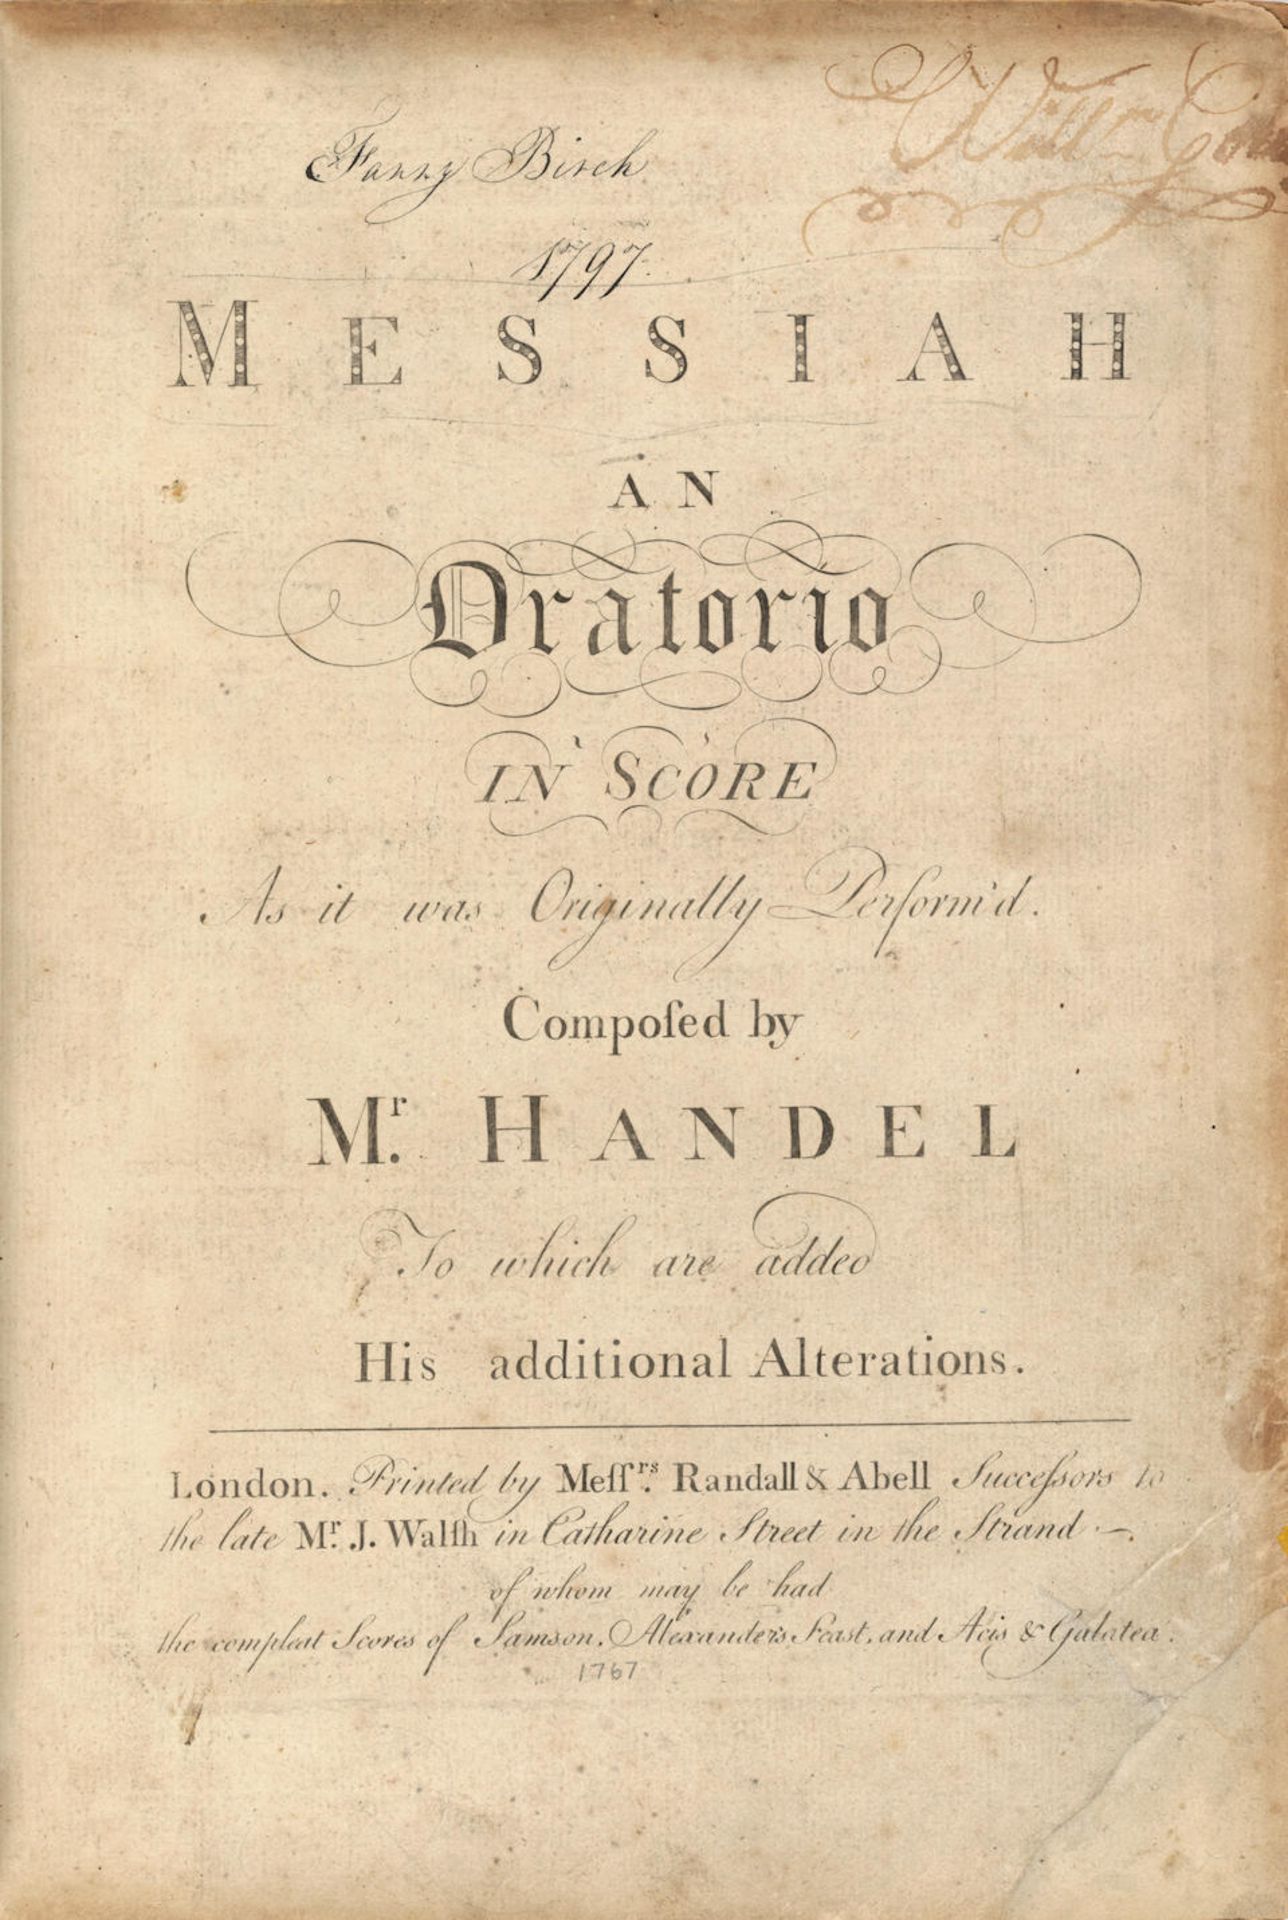 HANDEL, GEORGE FREDERIC. 1685-1759. Messiah. An Oratorio in Score as It Was Originally Perform'd...